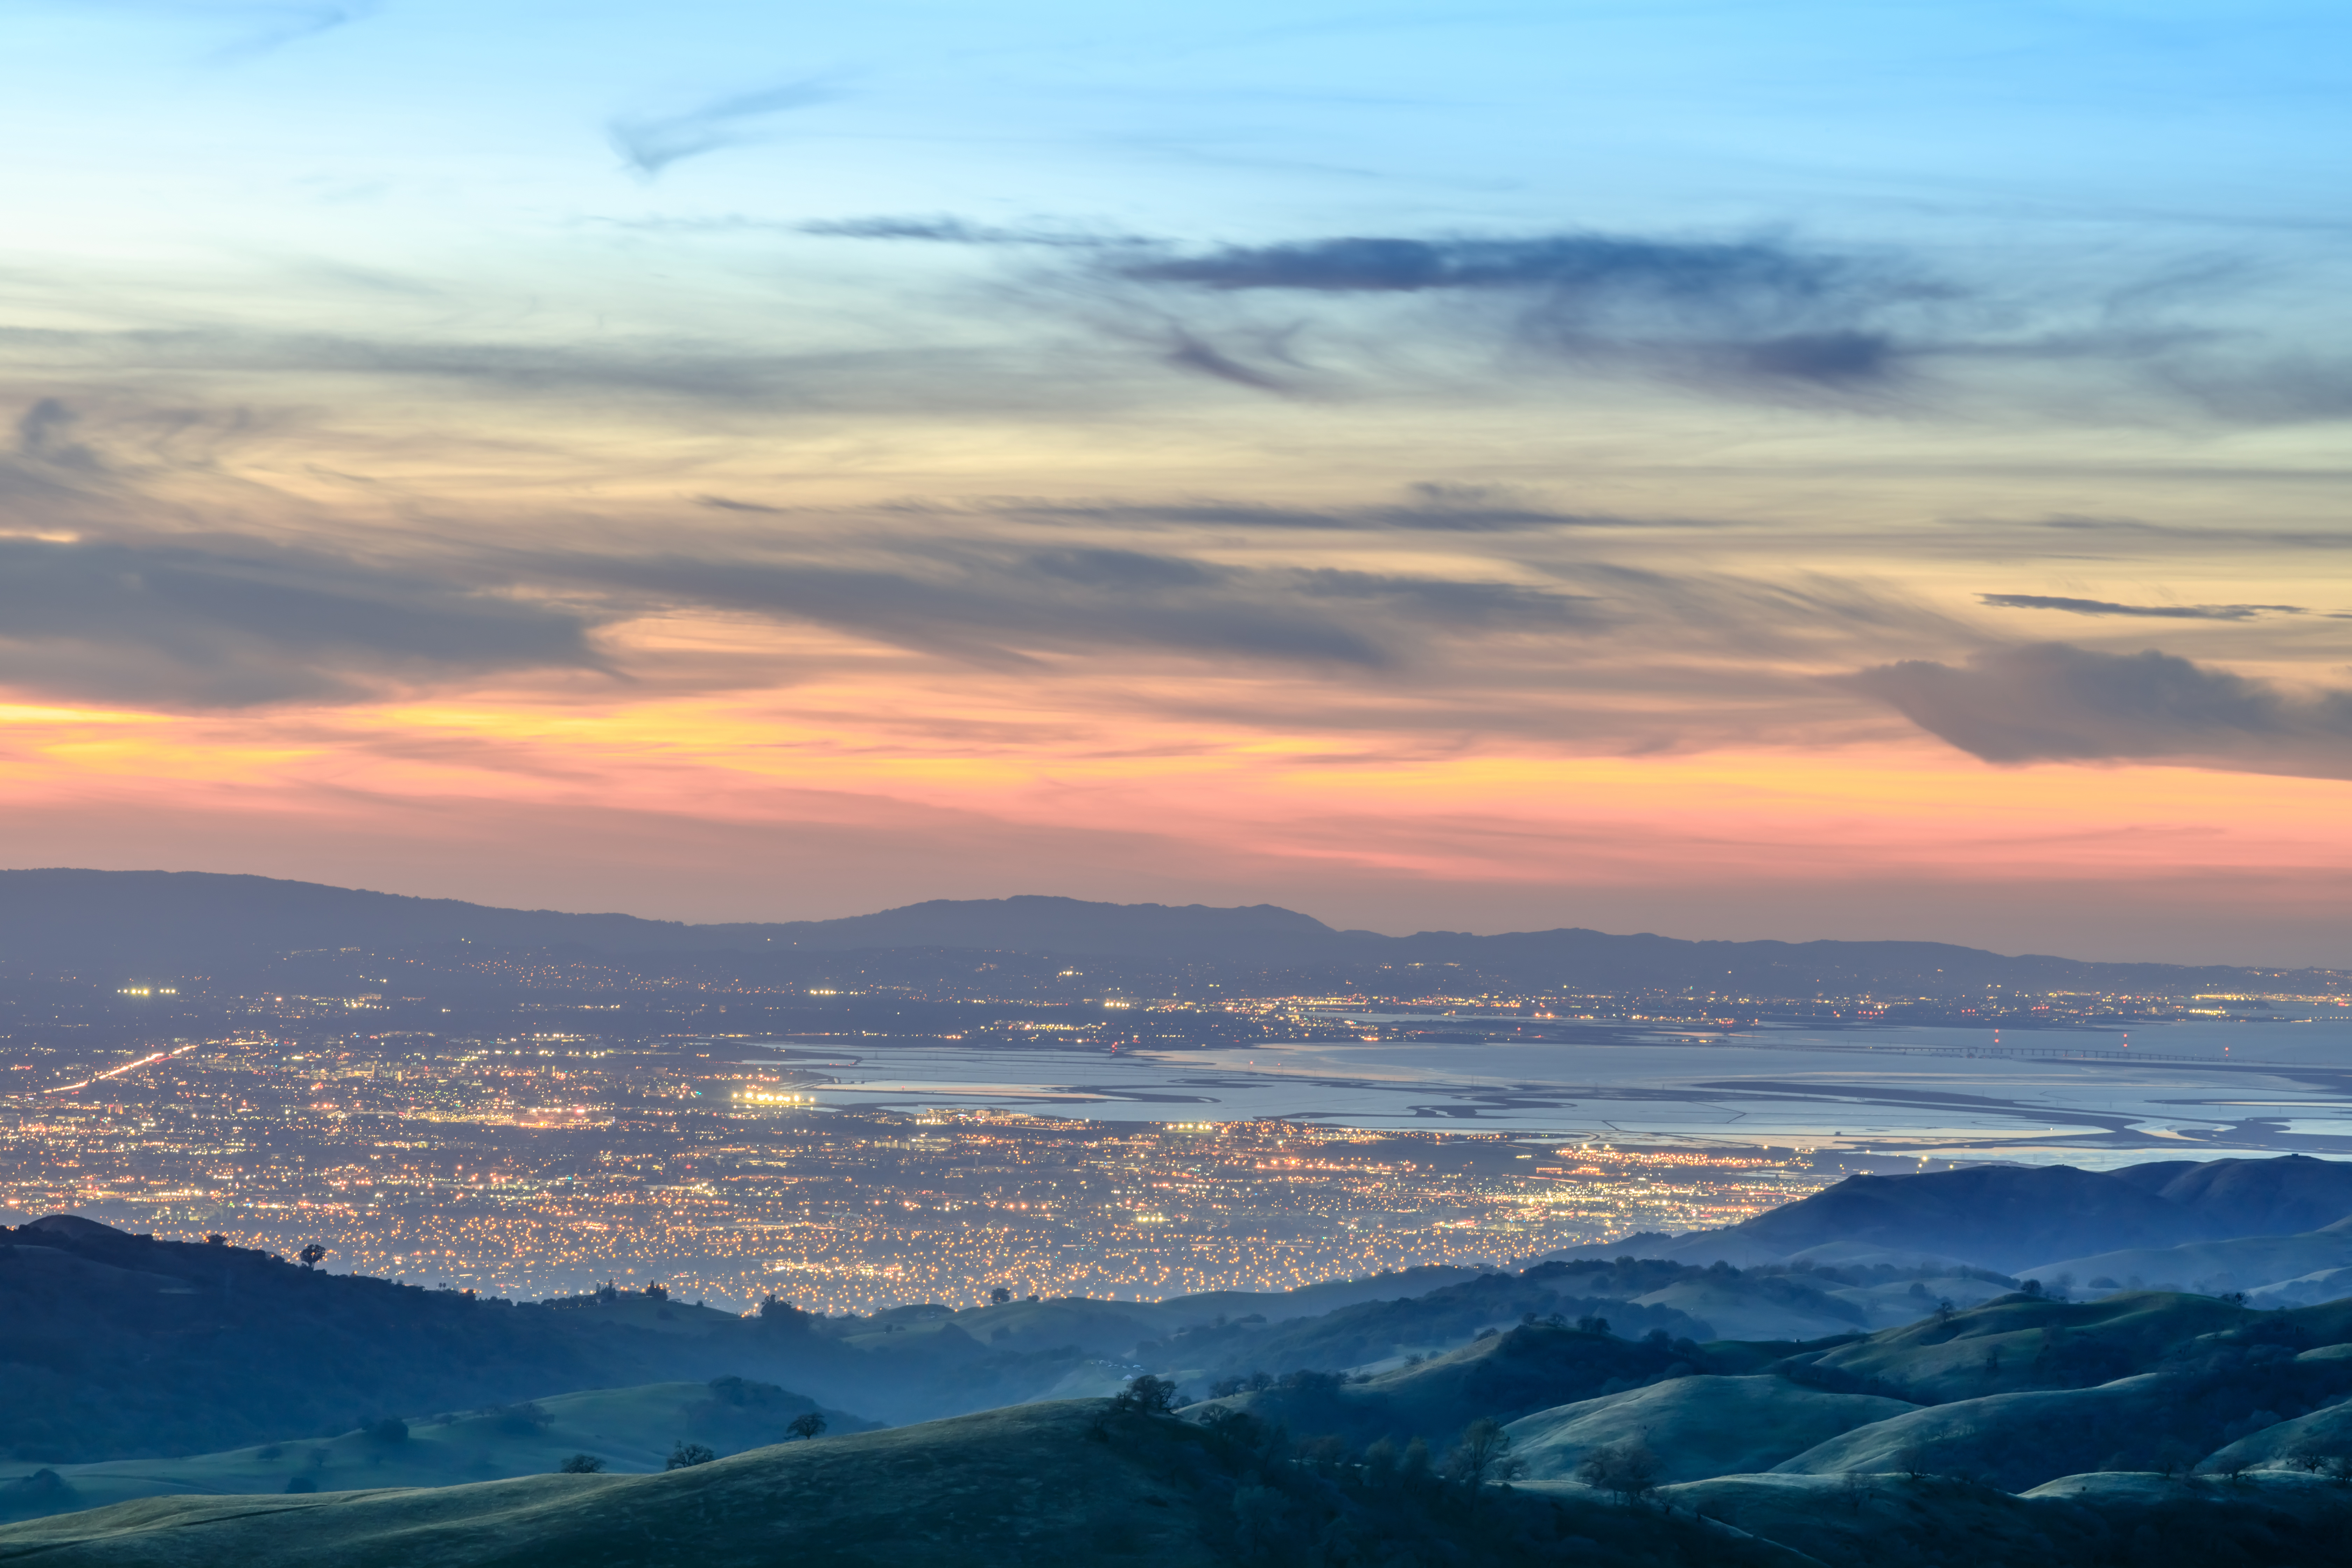 Silicon Valley Views from above. Santa Clara Valley at dusk as seen